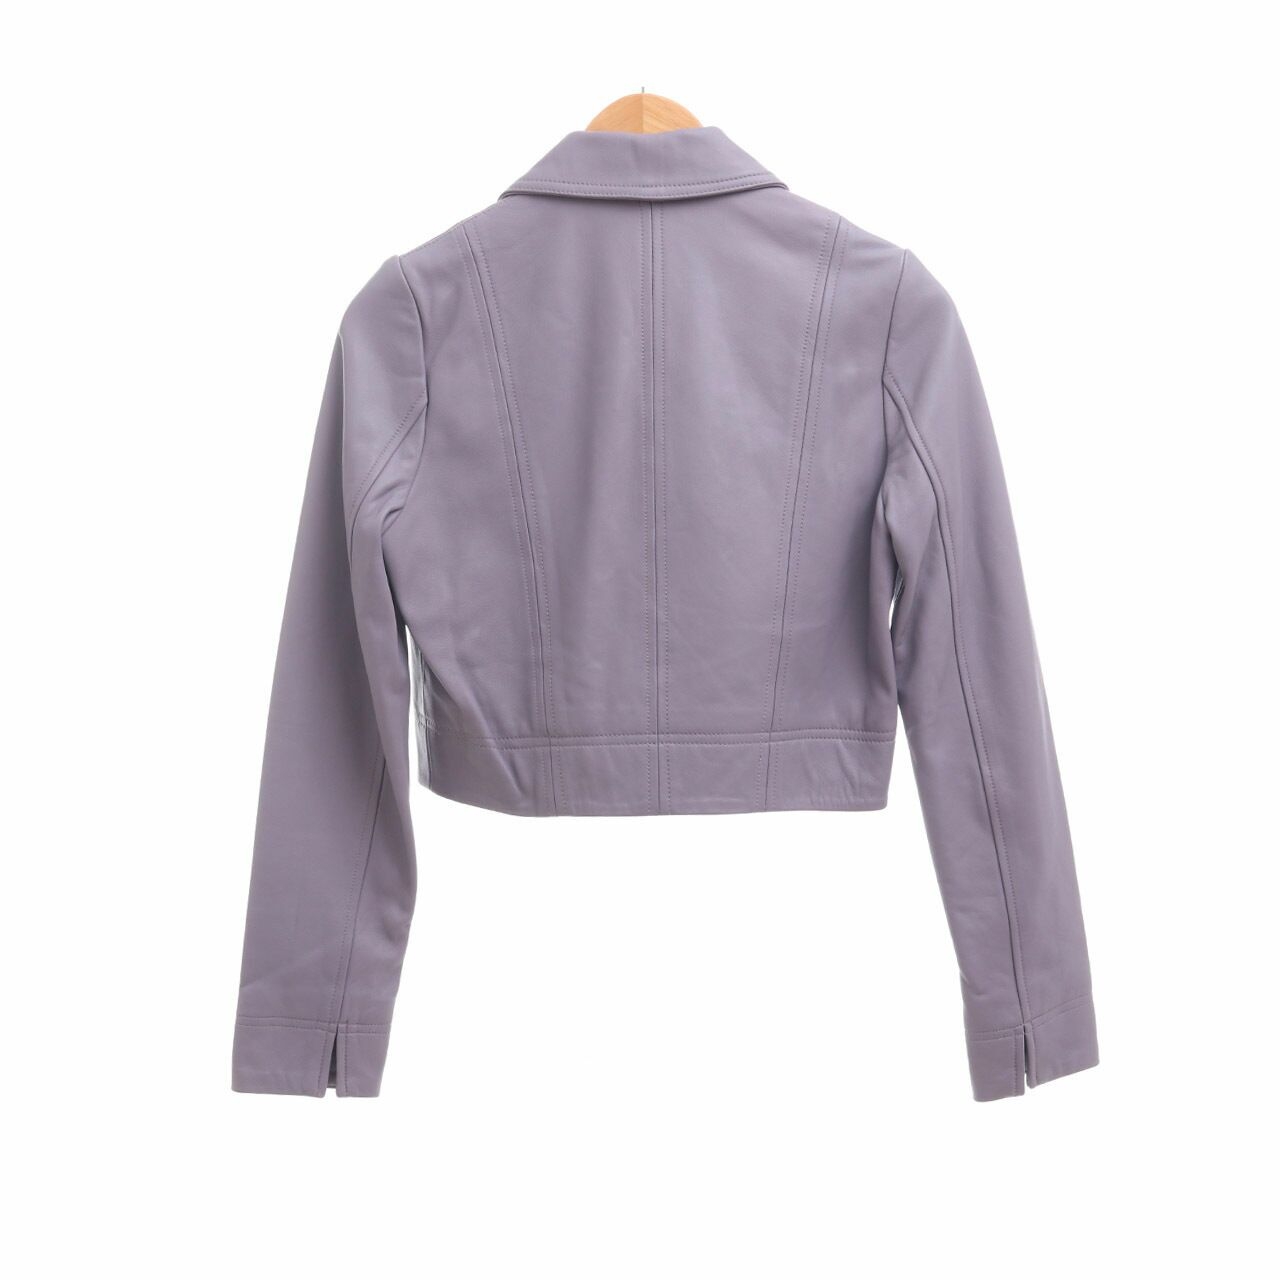 Alice Mccall Sweet Street Purple Leather Jacket 